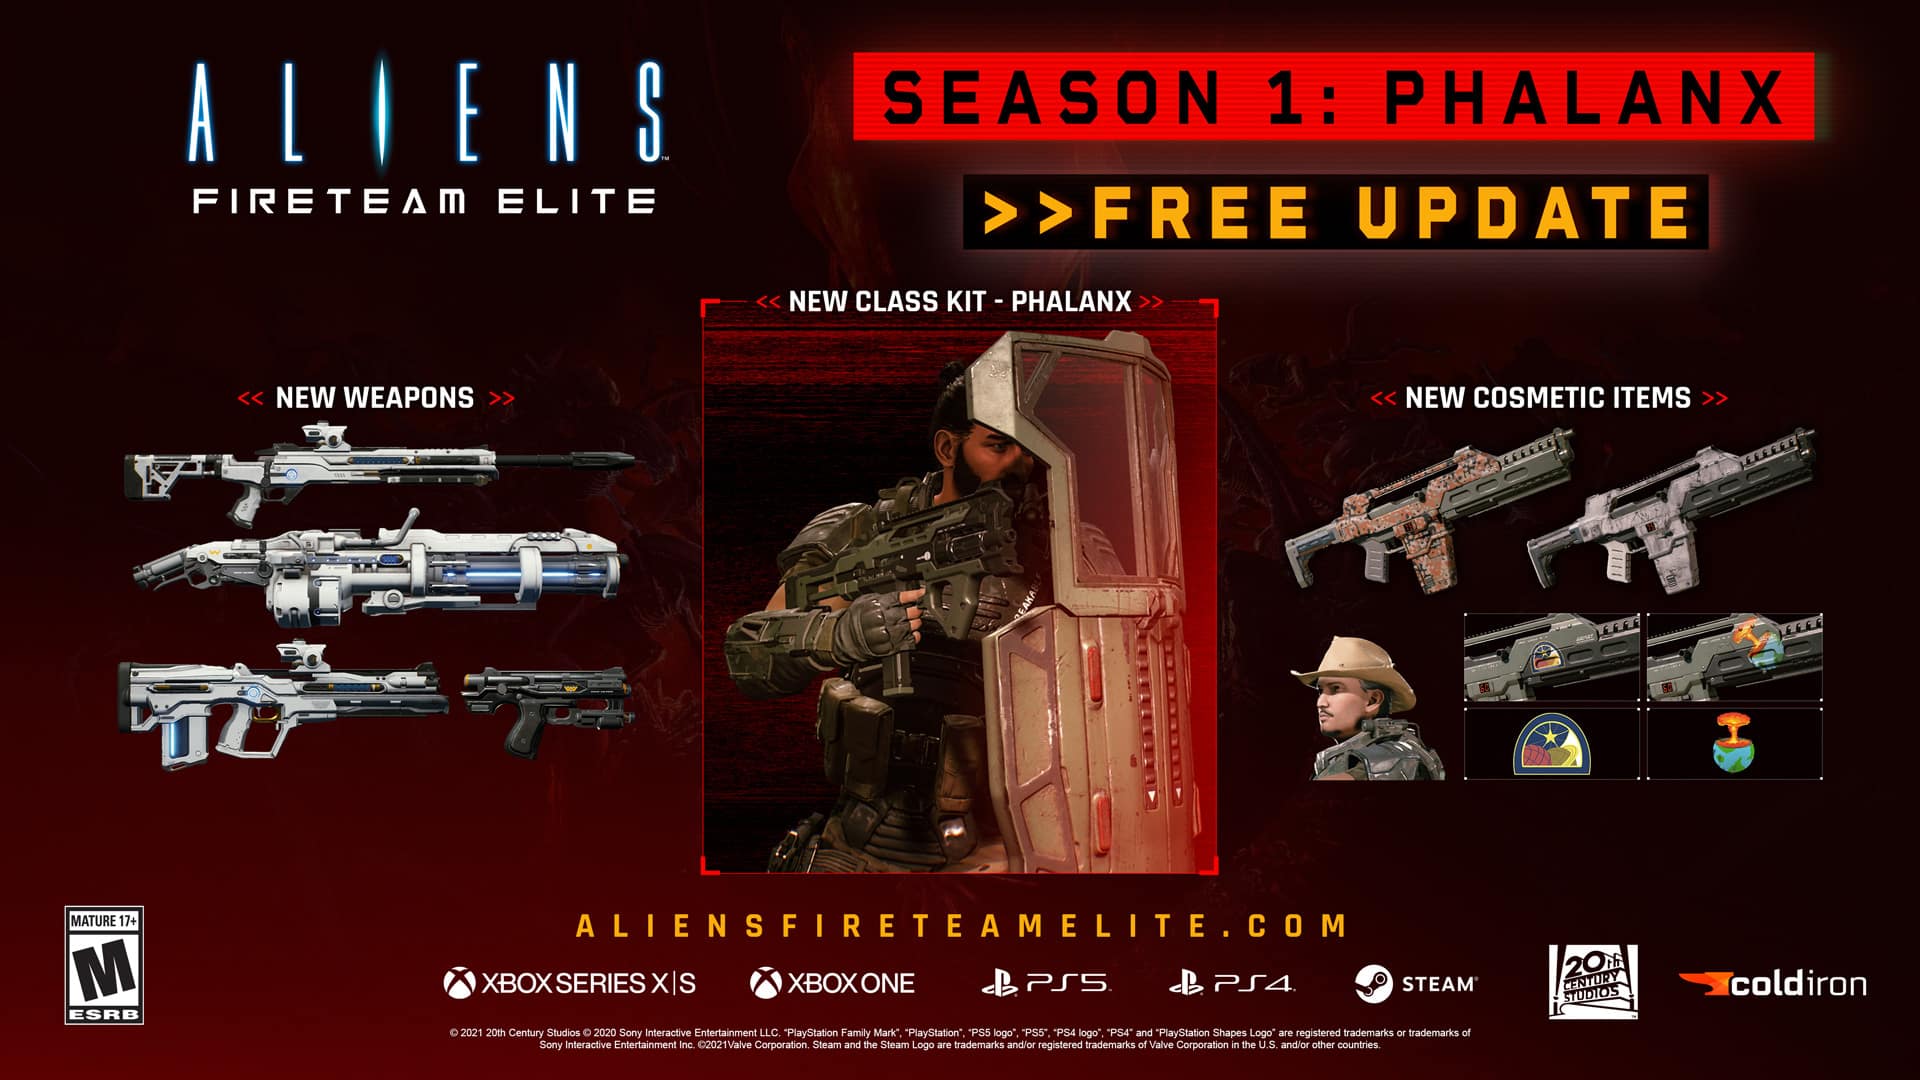 Aliens Fireteam Elite Season 1 begins today